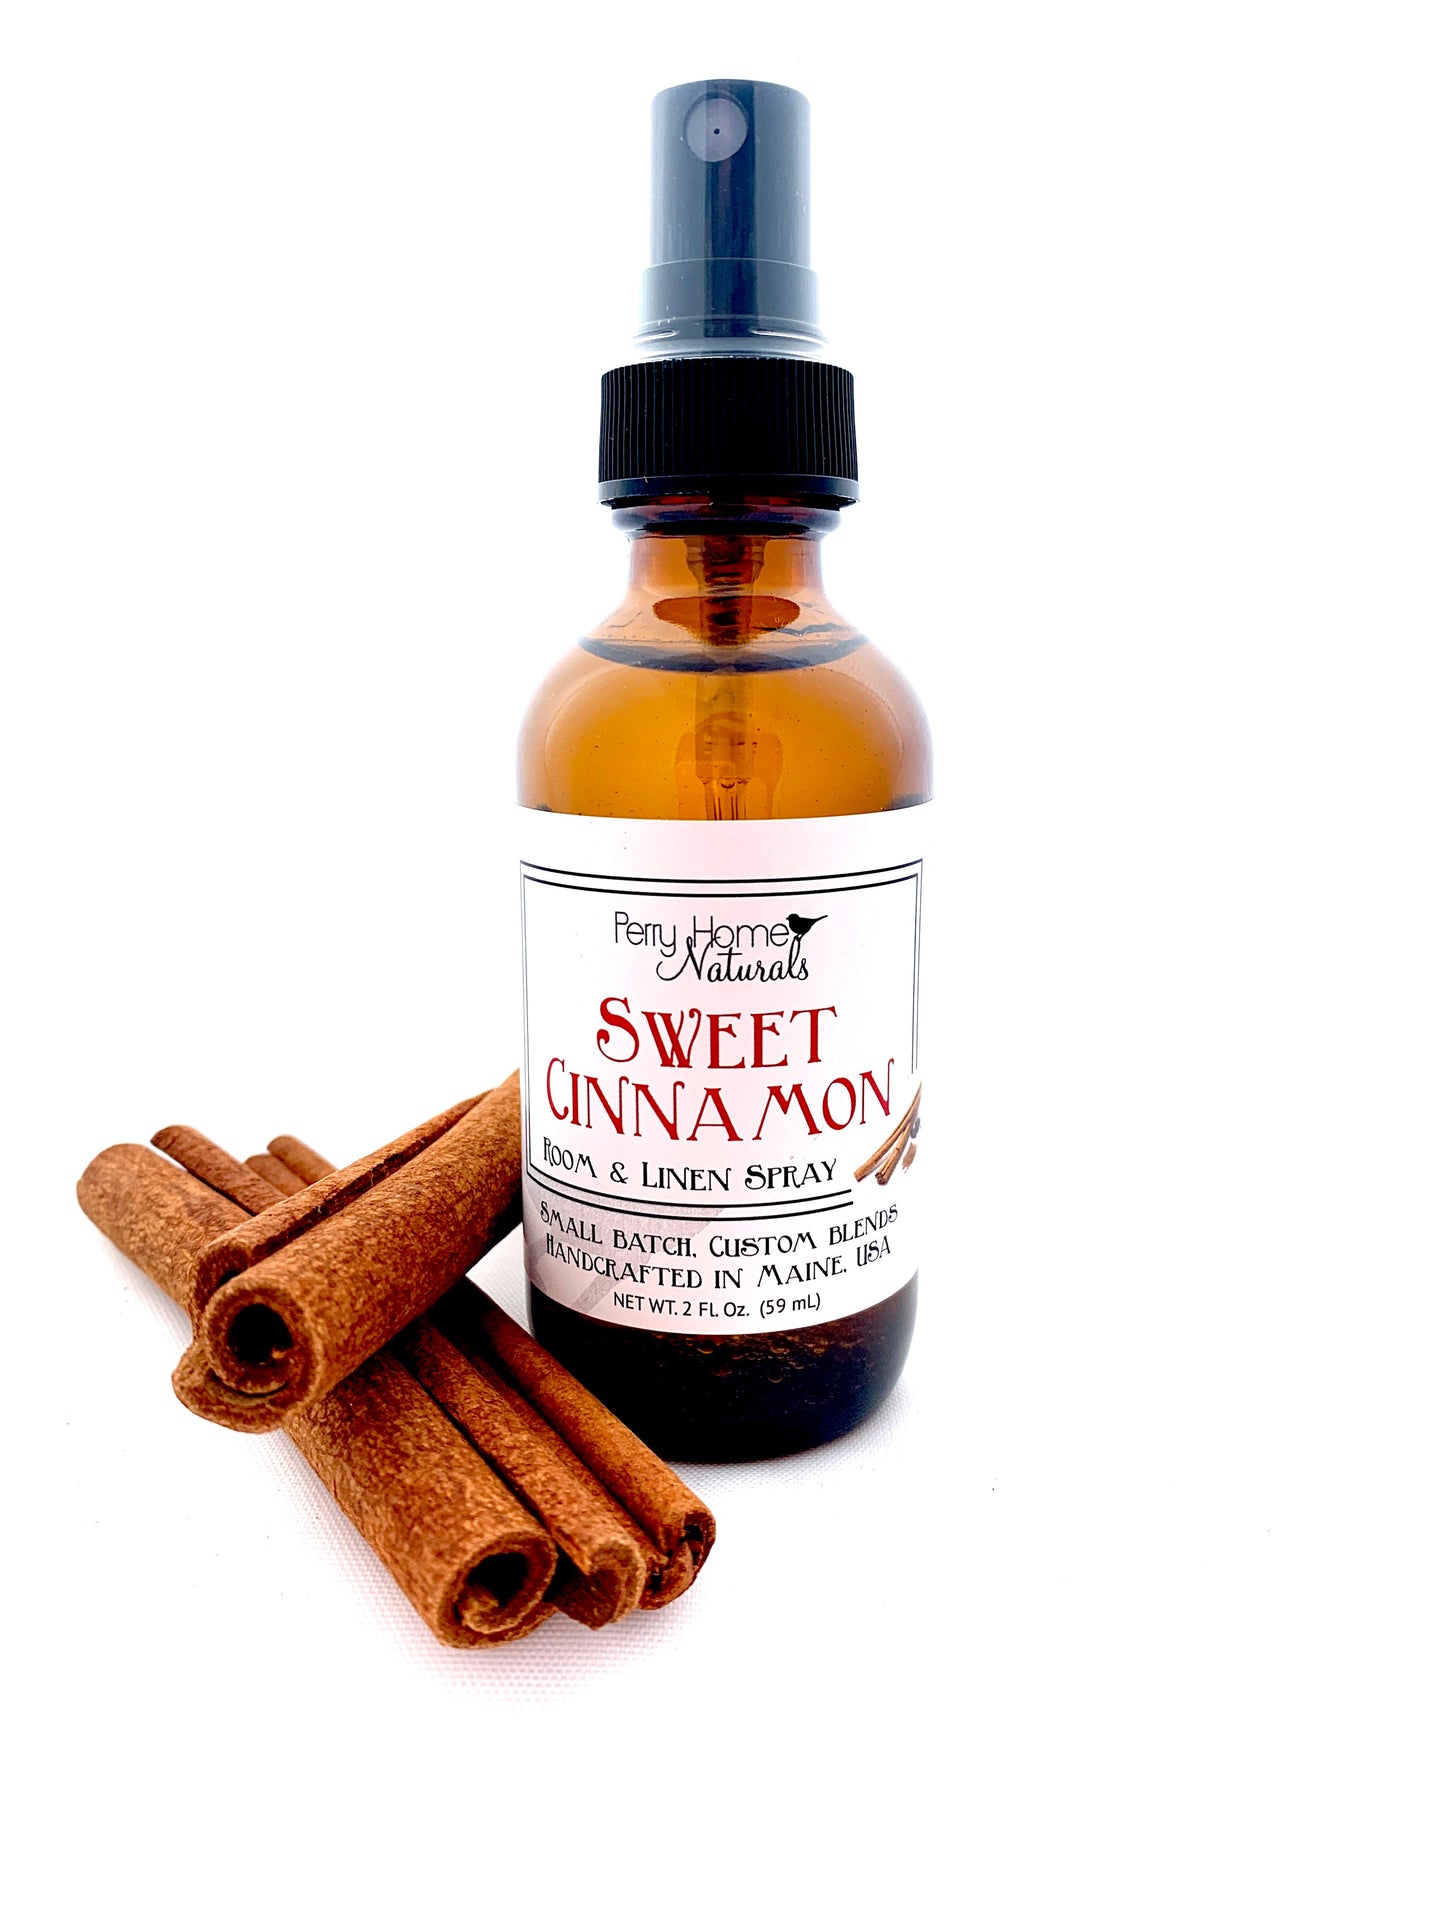 Sweet Cinnamon Room and Linen Spray - Organic Cinnamon Room Spray